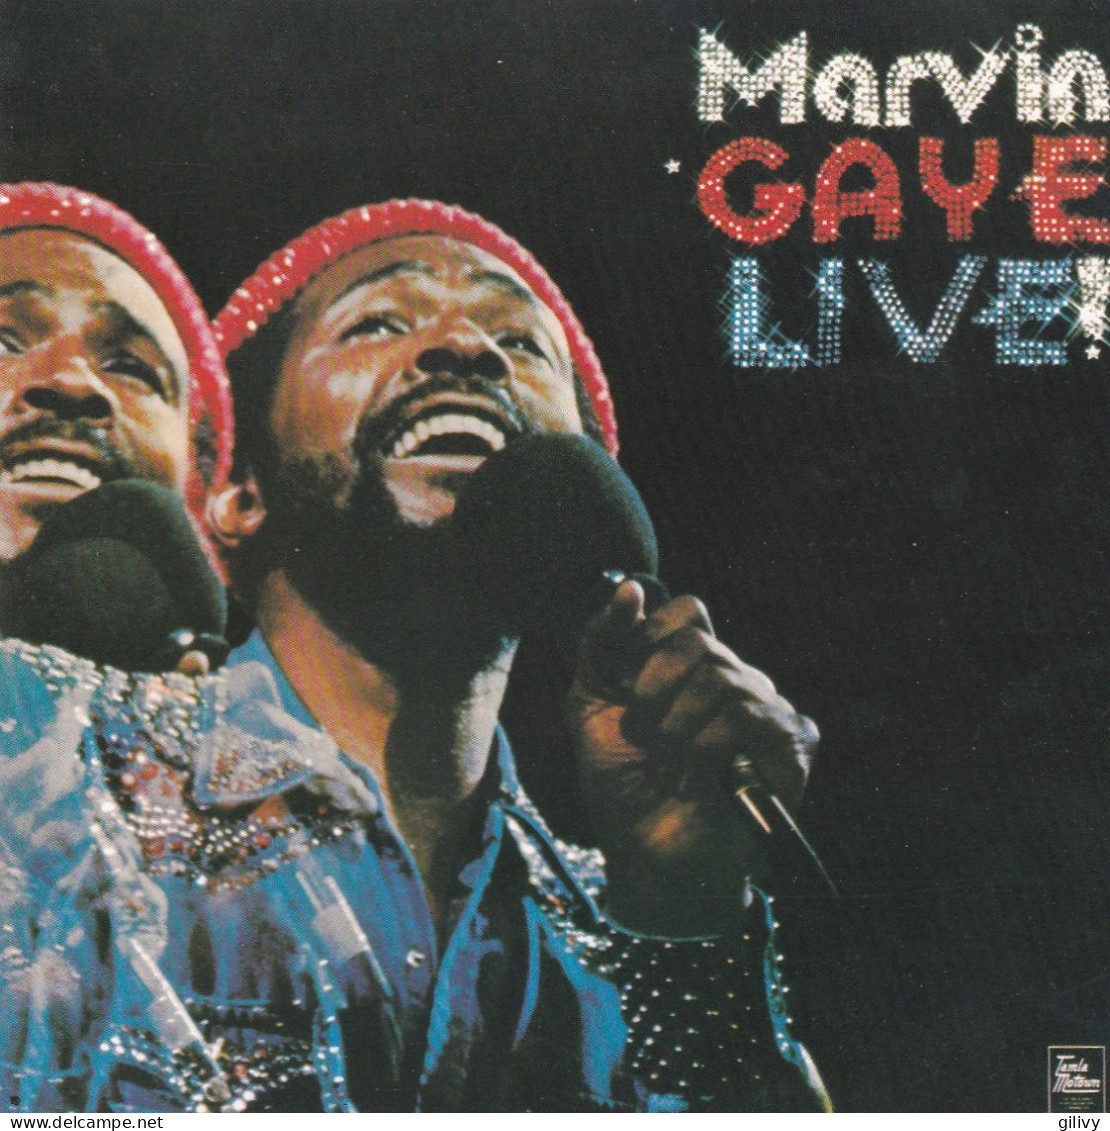 MARVIN GAYE : " Live " - CD Album - Soul - R&B